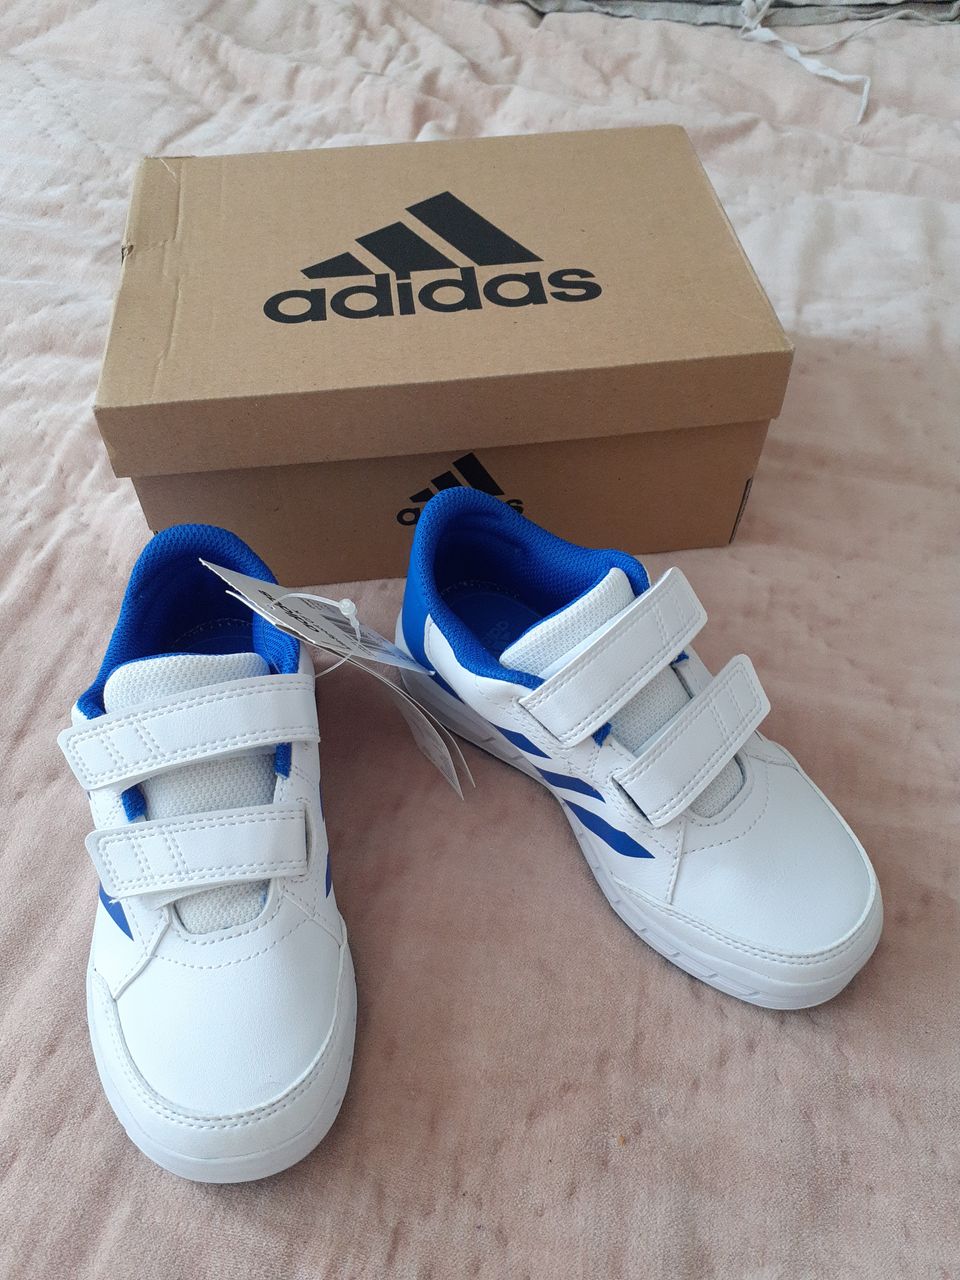 Adidas uudet kengät 28 (30)